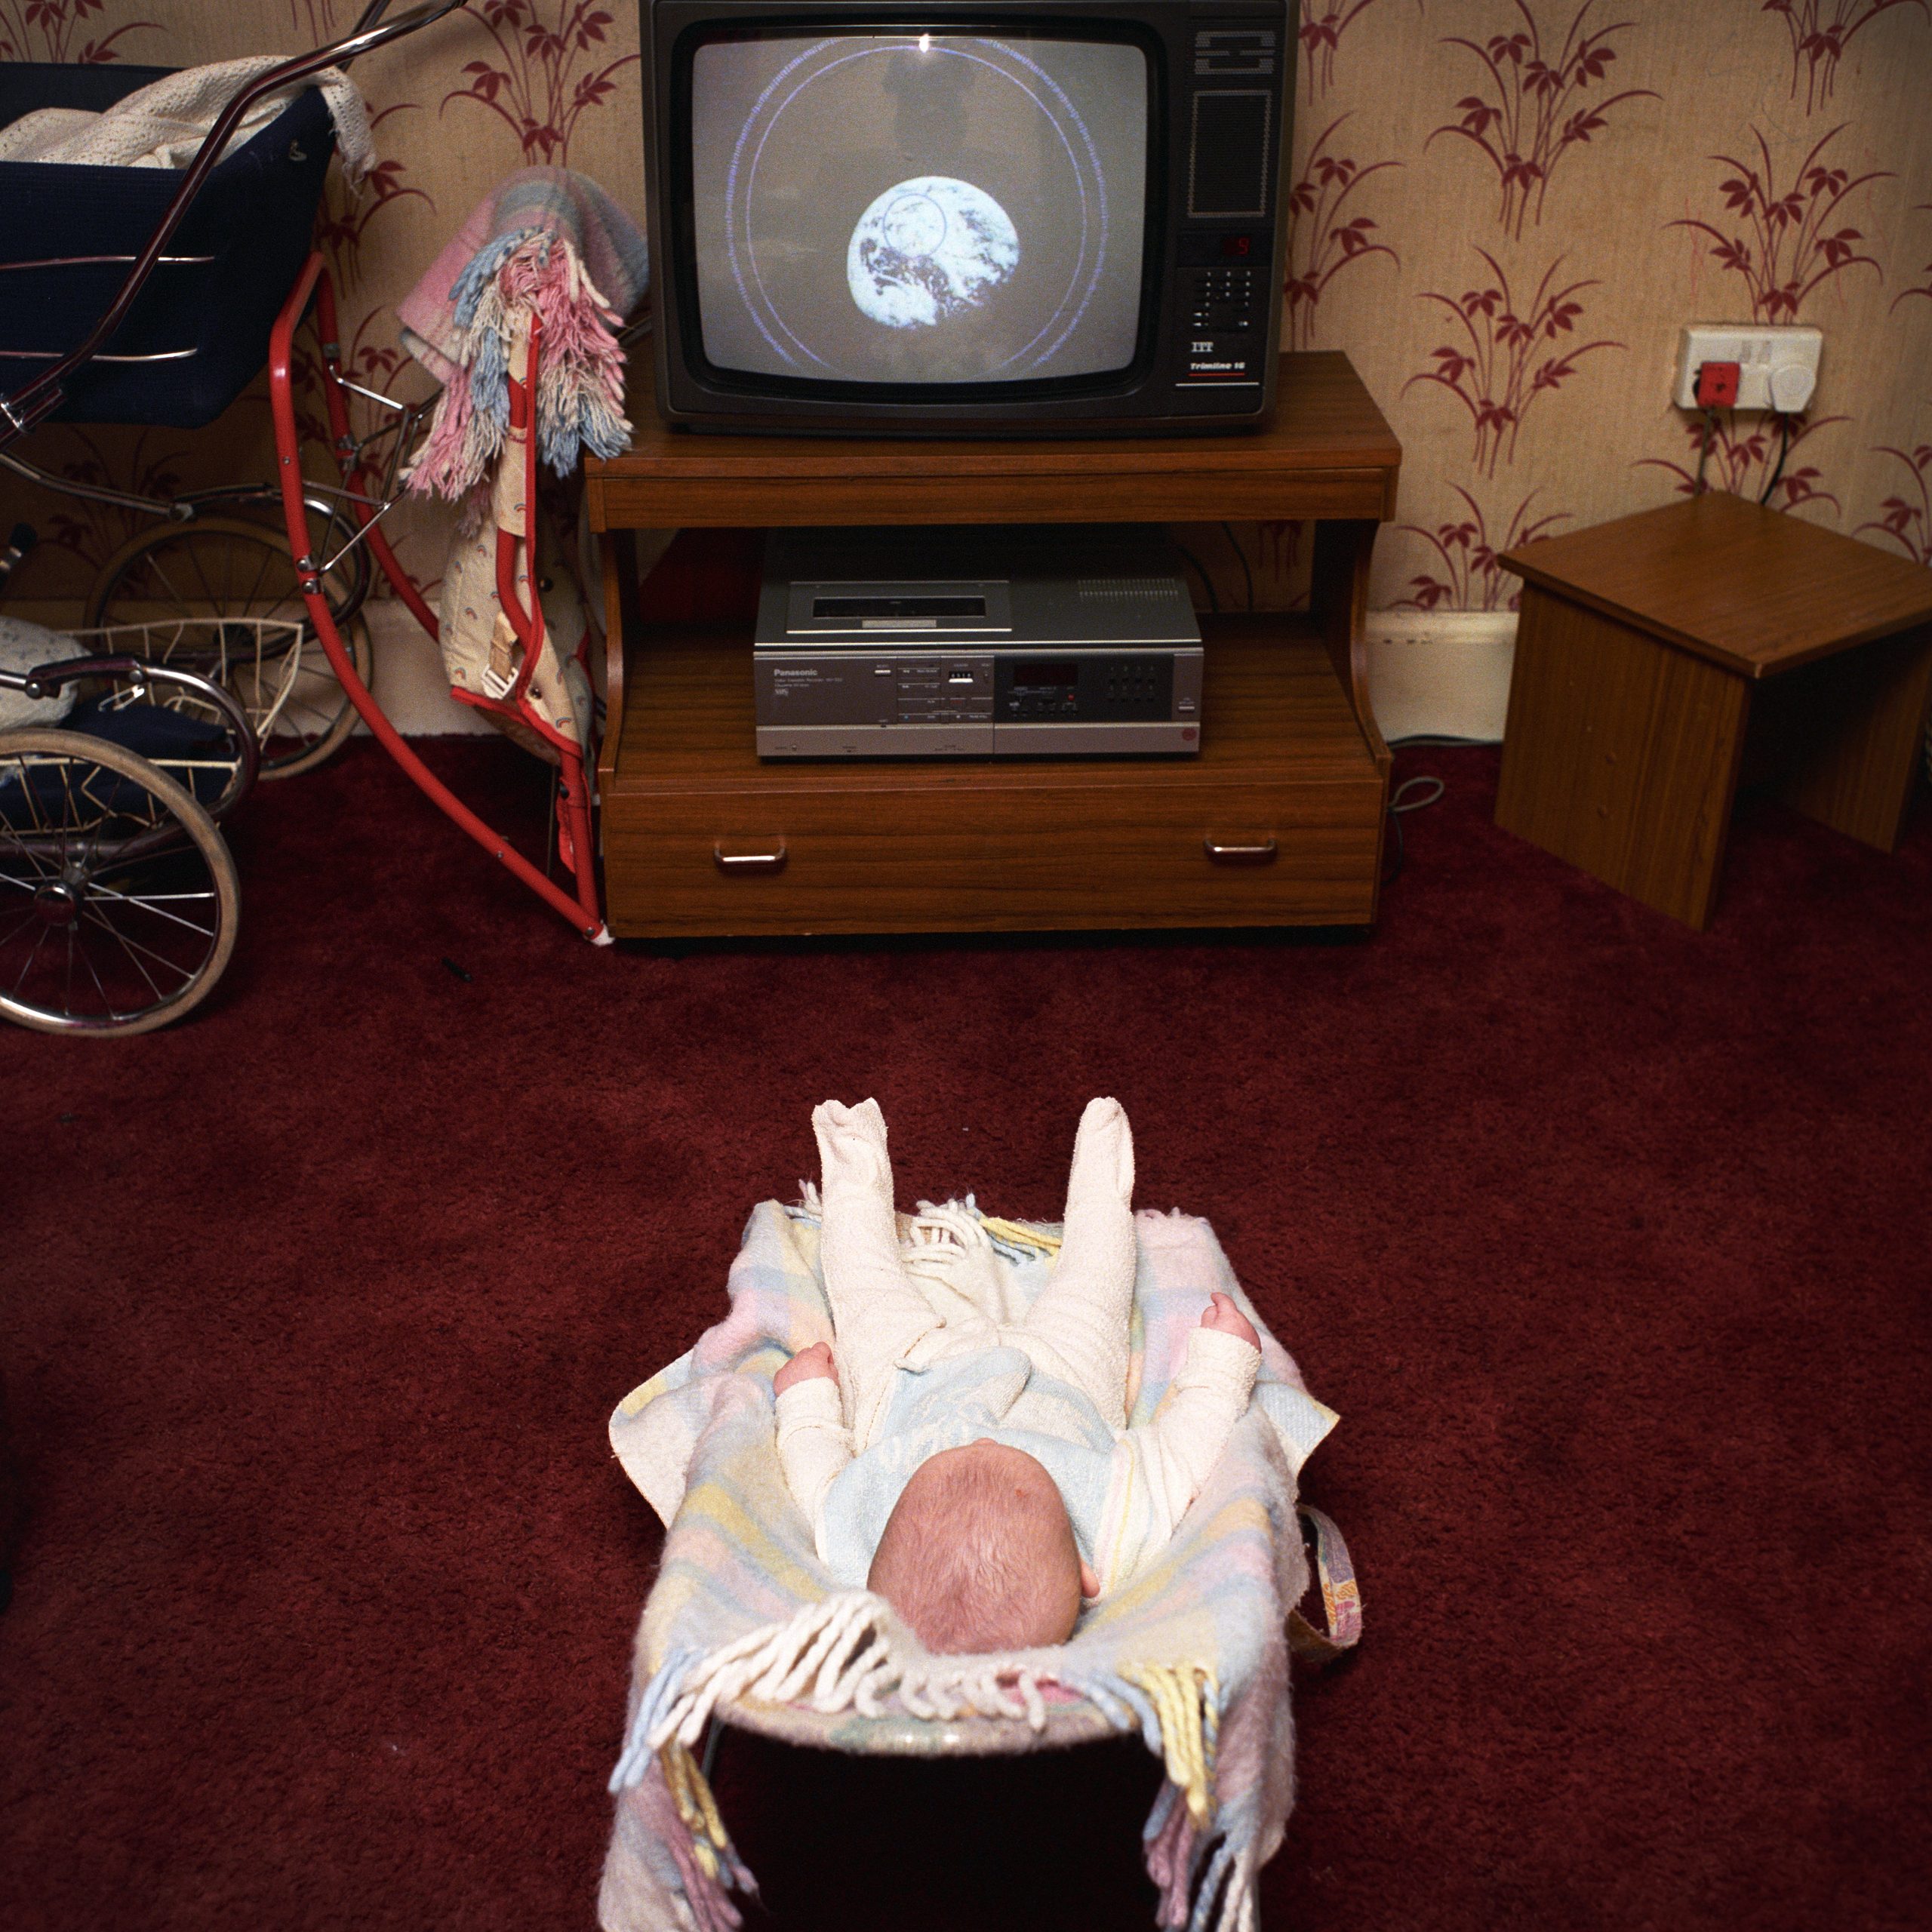 'Baby, TV, Earth' by David Moore